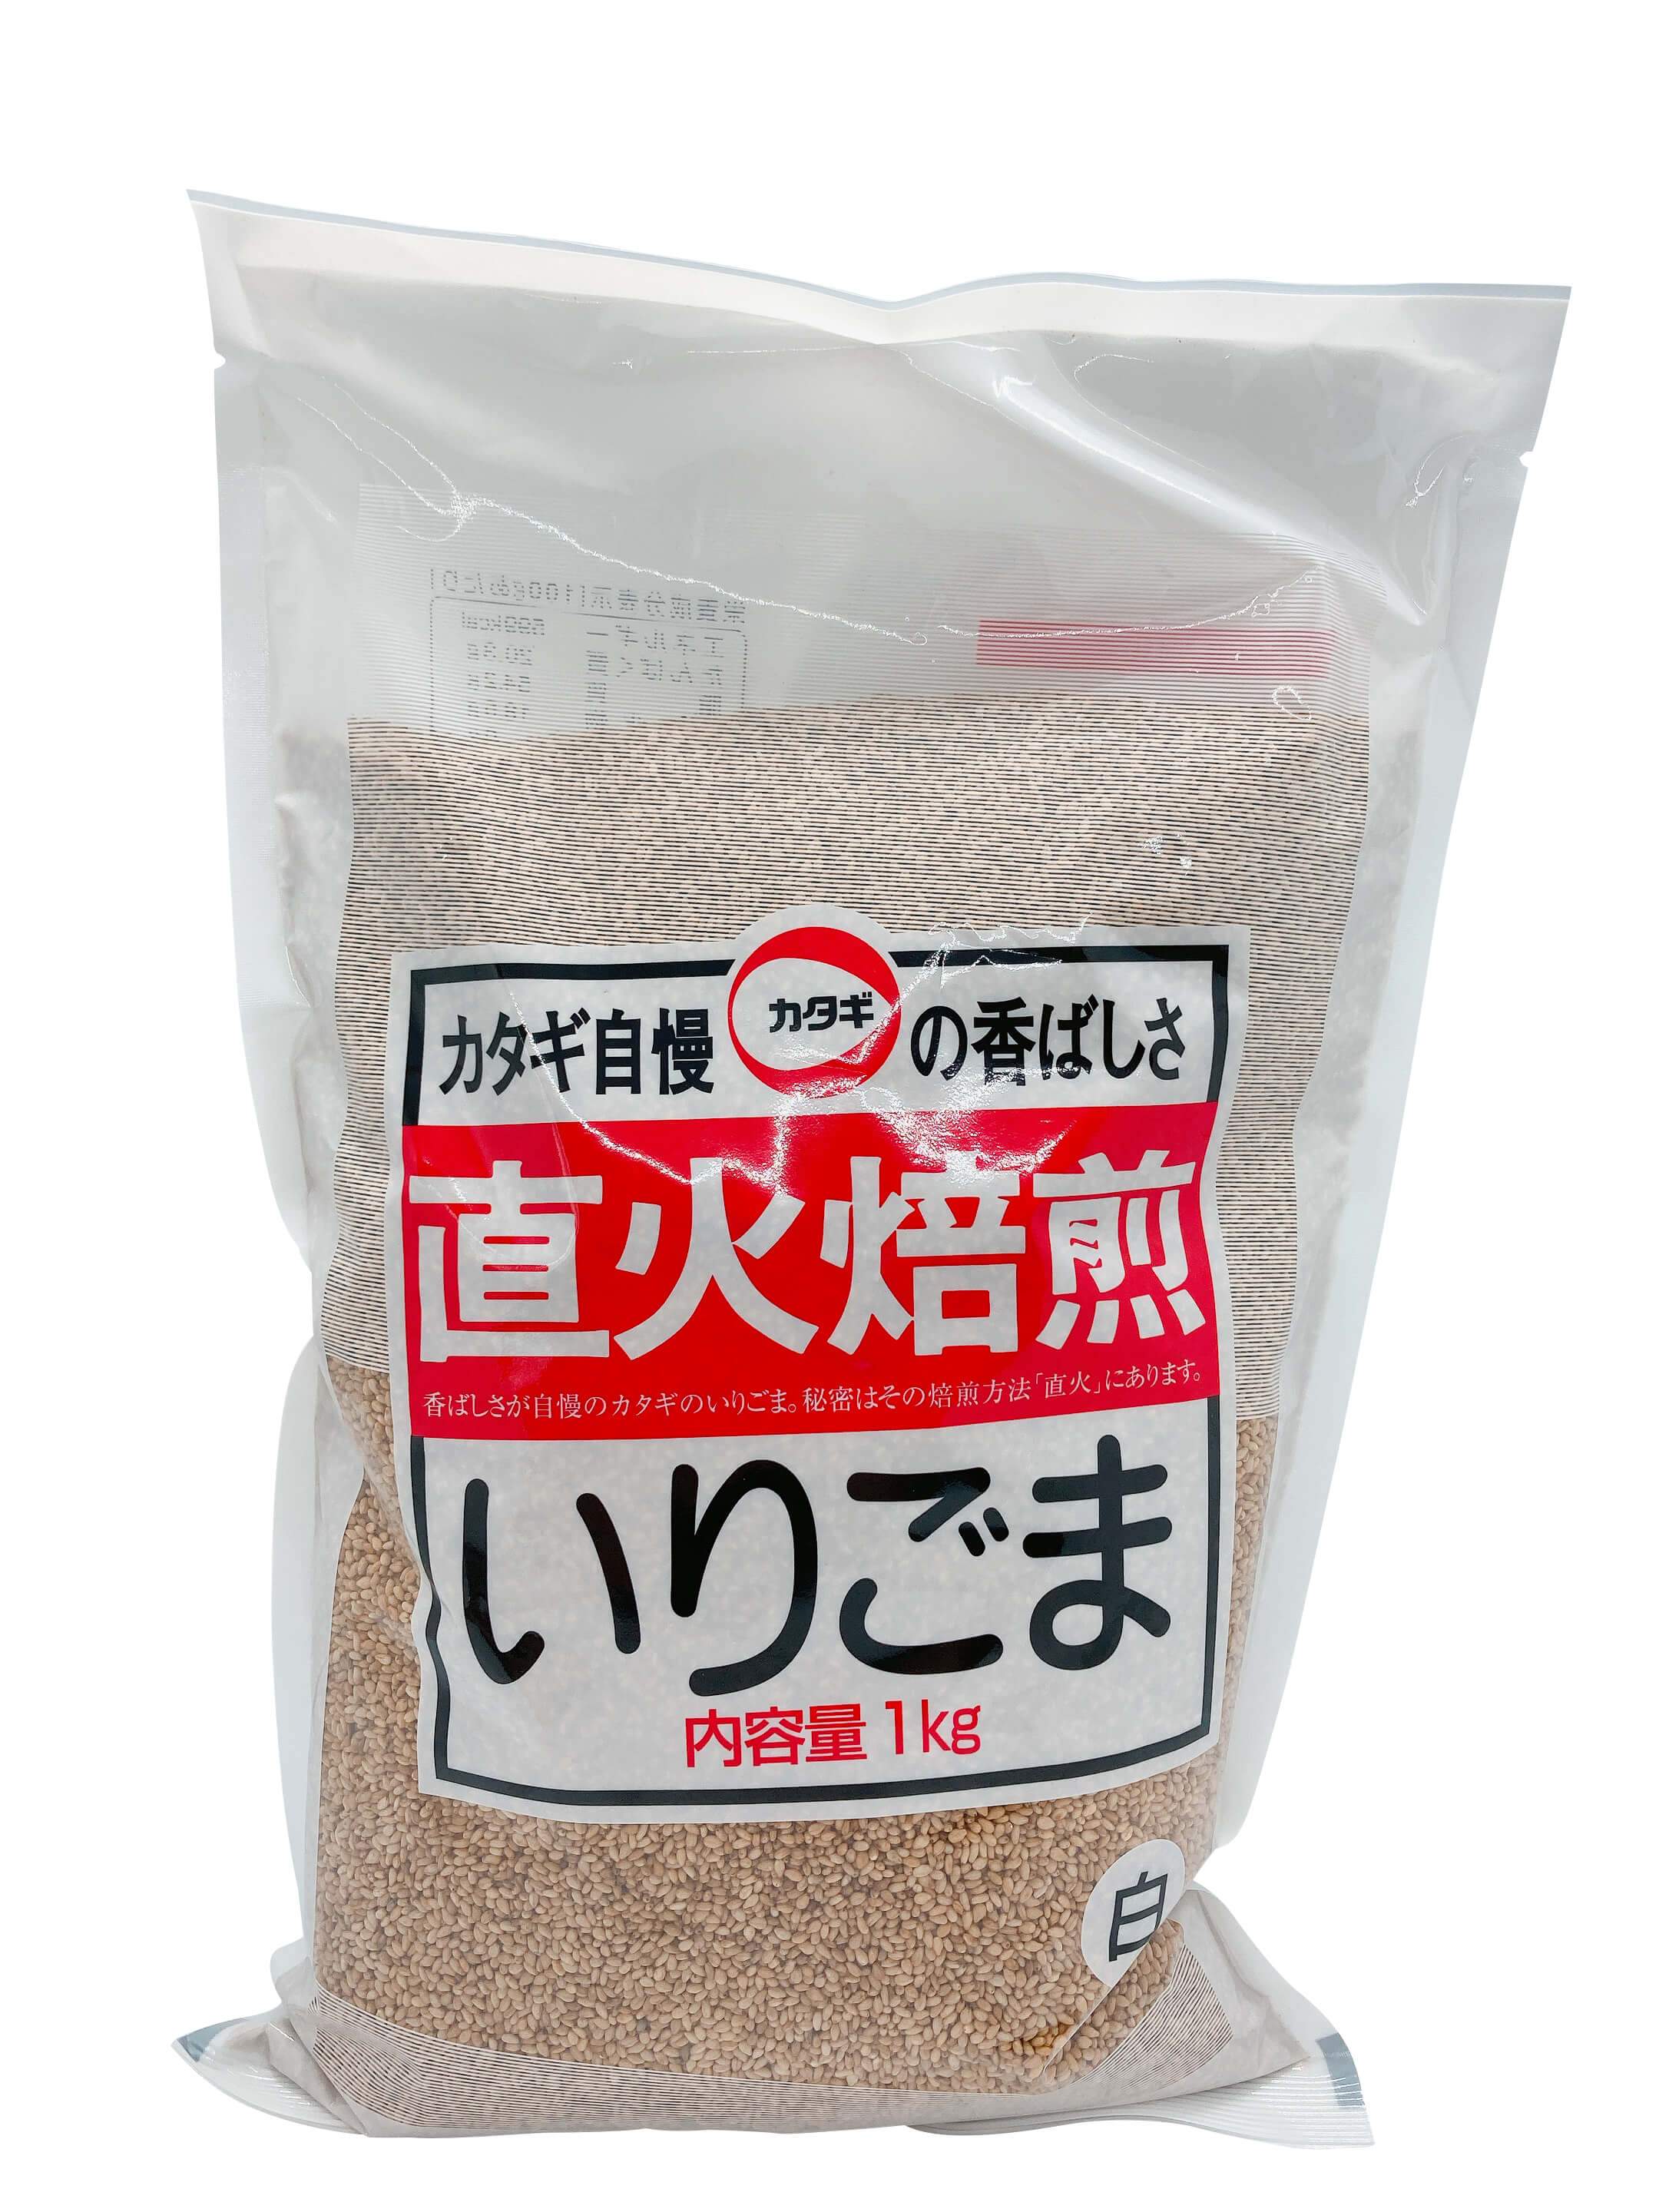 Dried　KATAGI　1KG　beans/Canned　by　Groceries　SHIRO　umamill　food　food/Dried　IRIGOMA　SEED]　[SESAME　N033